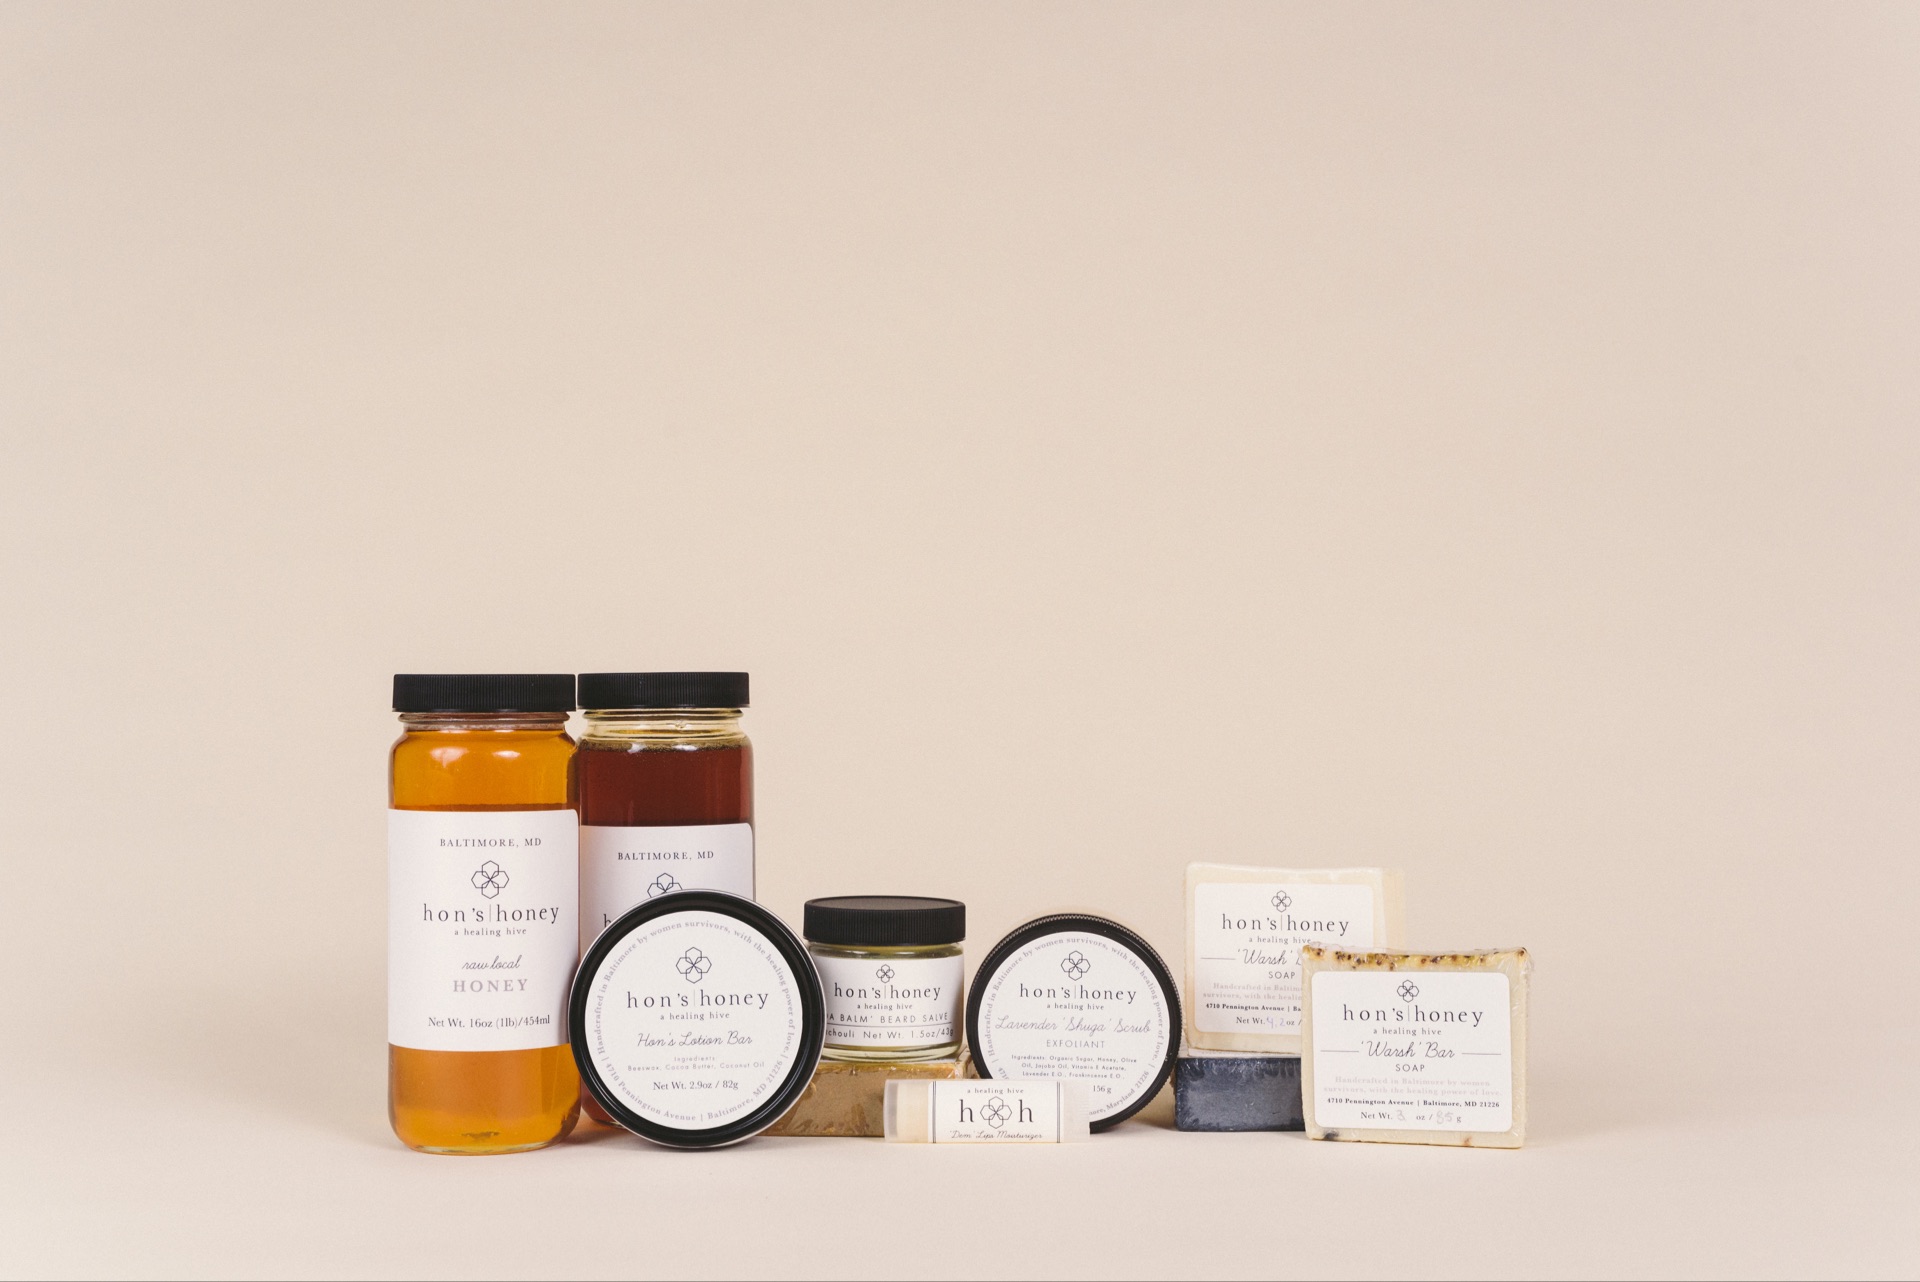 Various Hon's Honey items on display